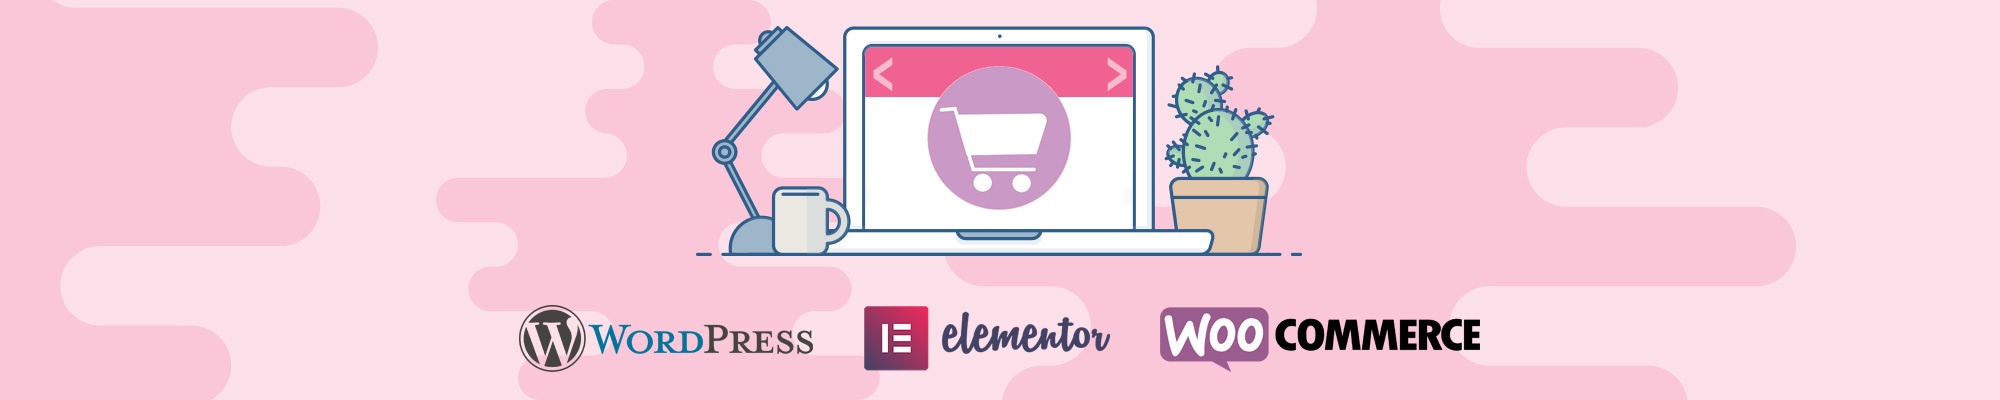 Lojas da web WordPress com Elementor Pro e WooCommerce